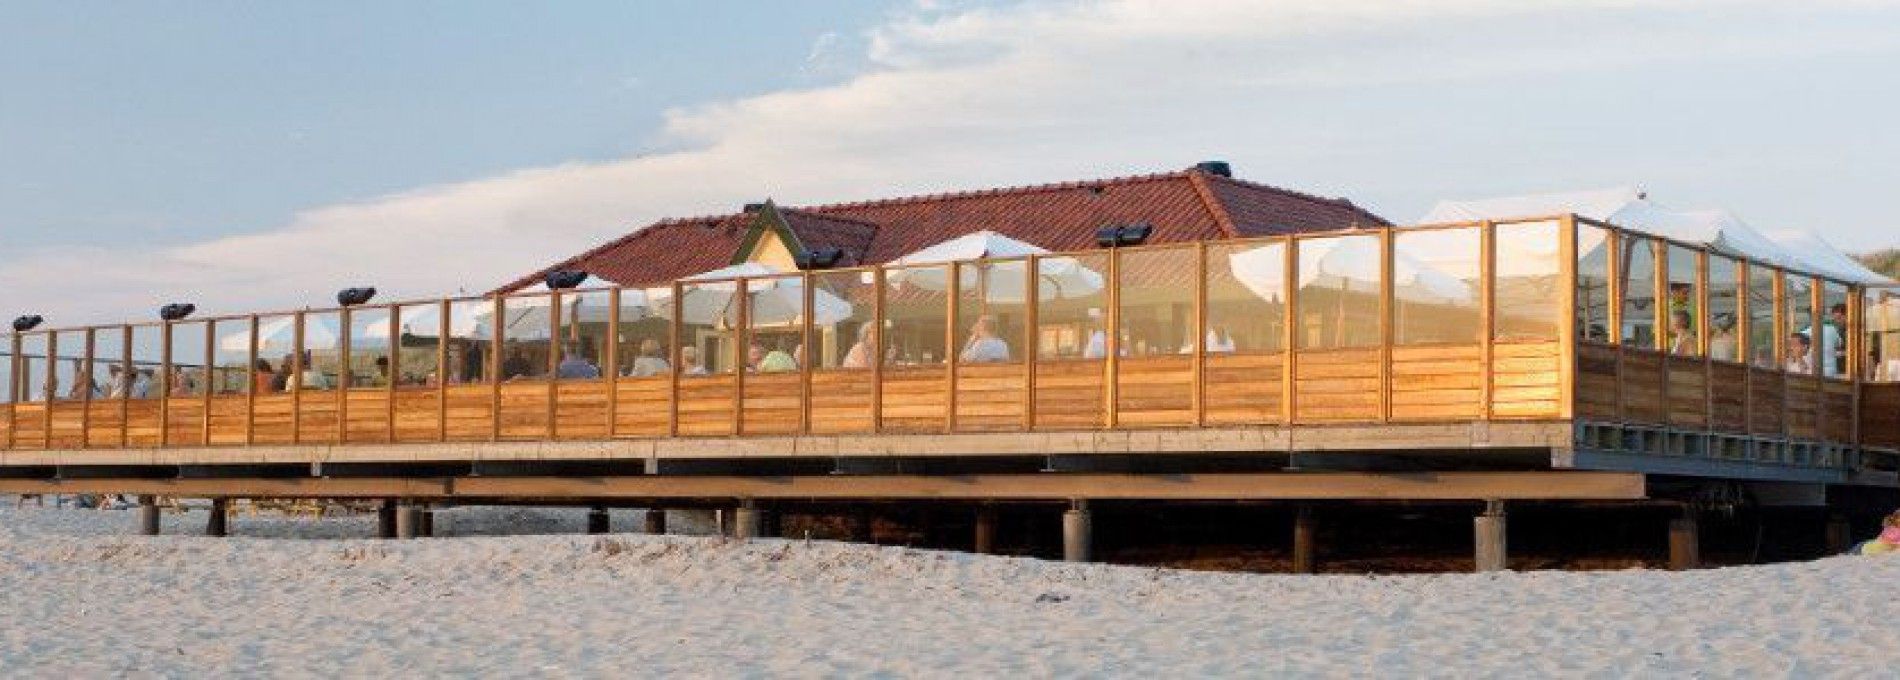 Beach pavilions - Tourist Information “VVV”Ameland